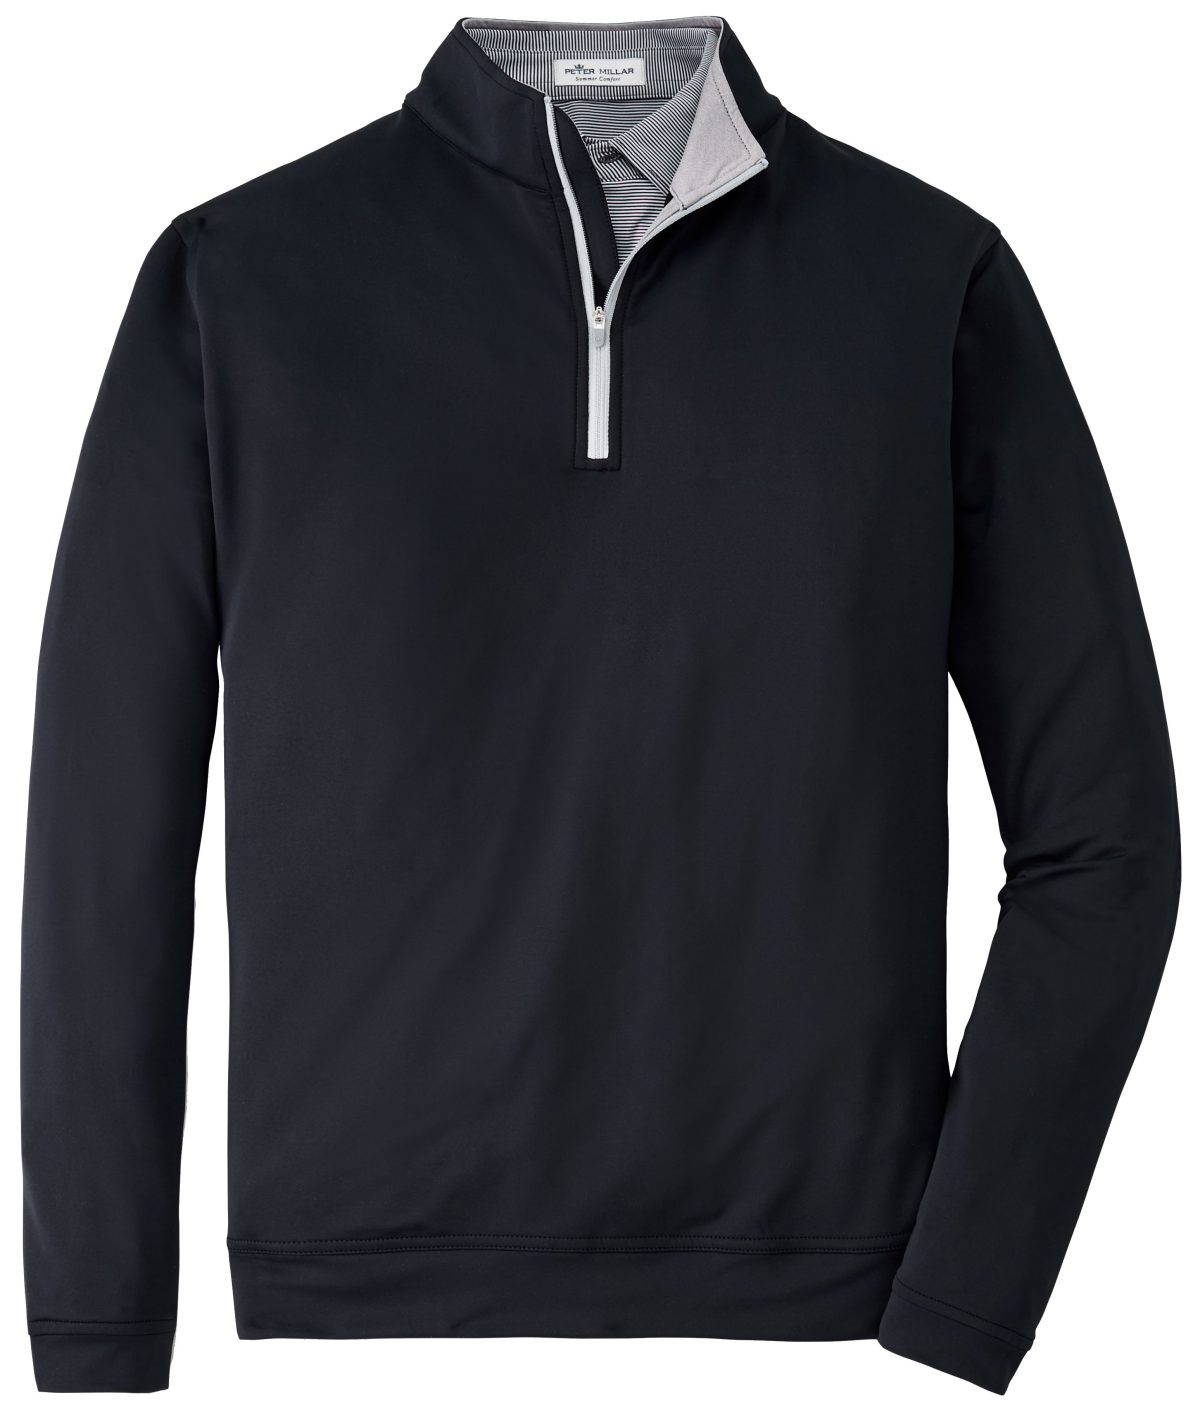 Peter Millar Men's Perth Performance Quarter-Zip Golf Pullover, Spandex/Polyester in Black, Size S